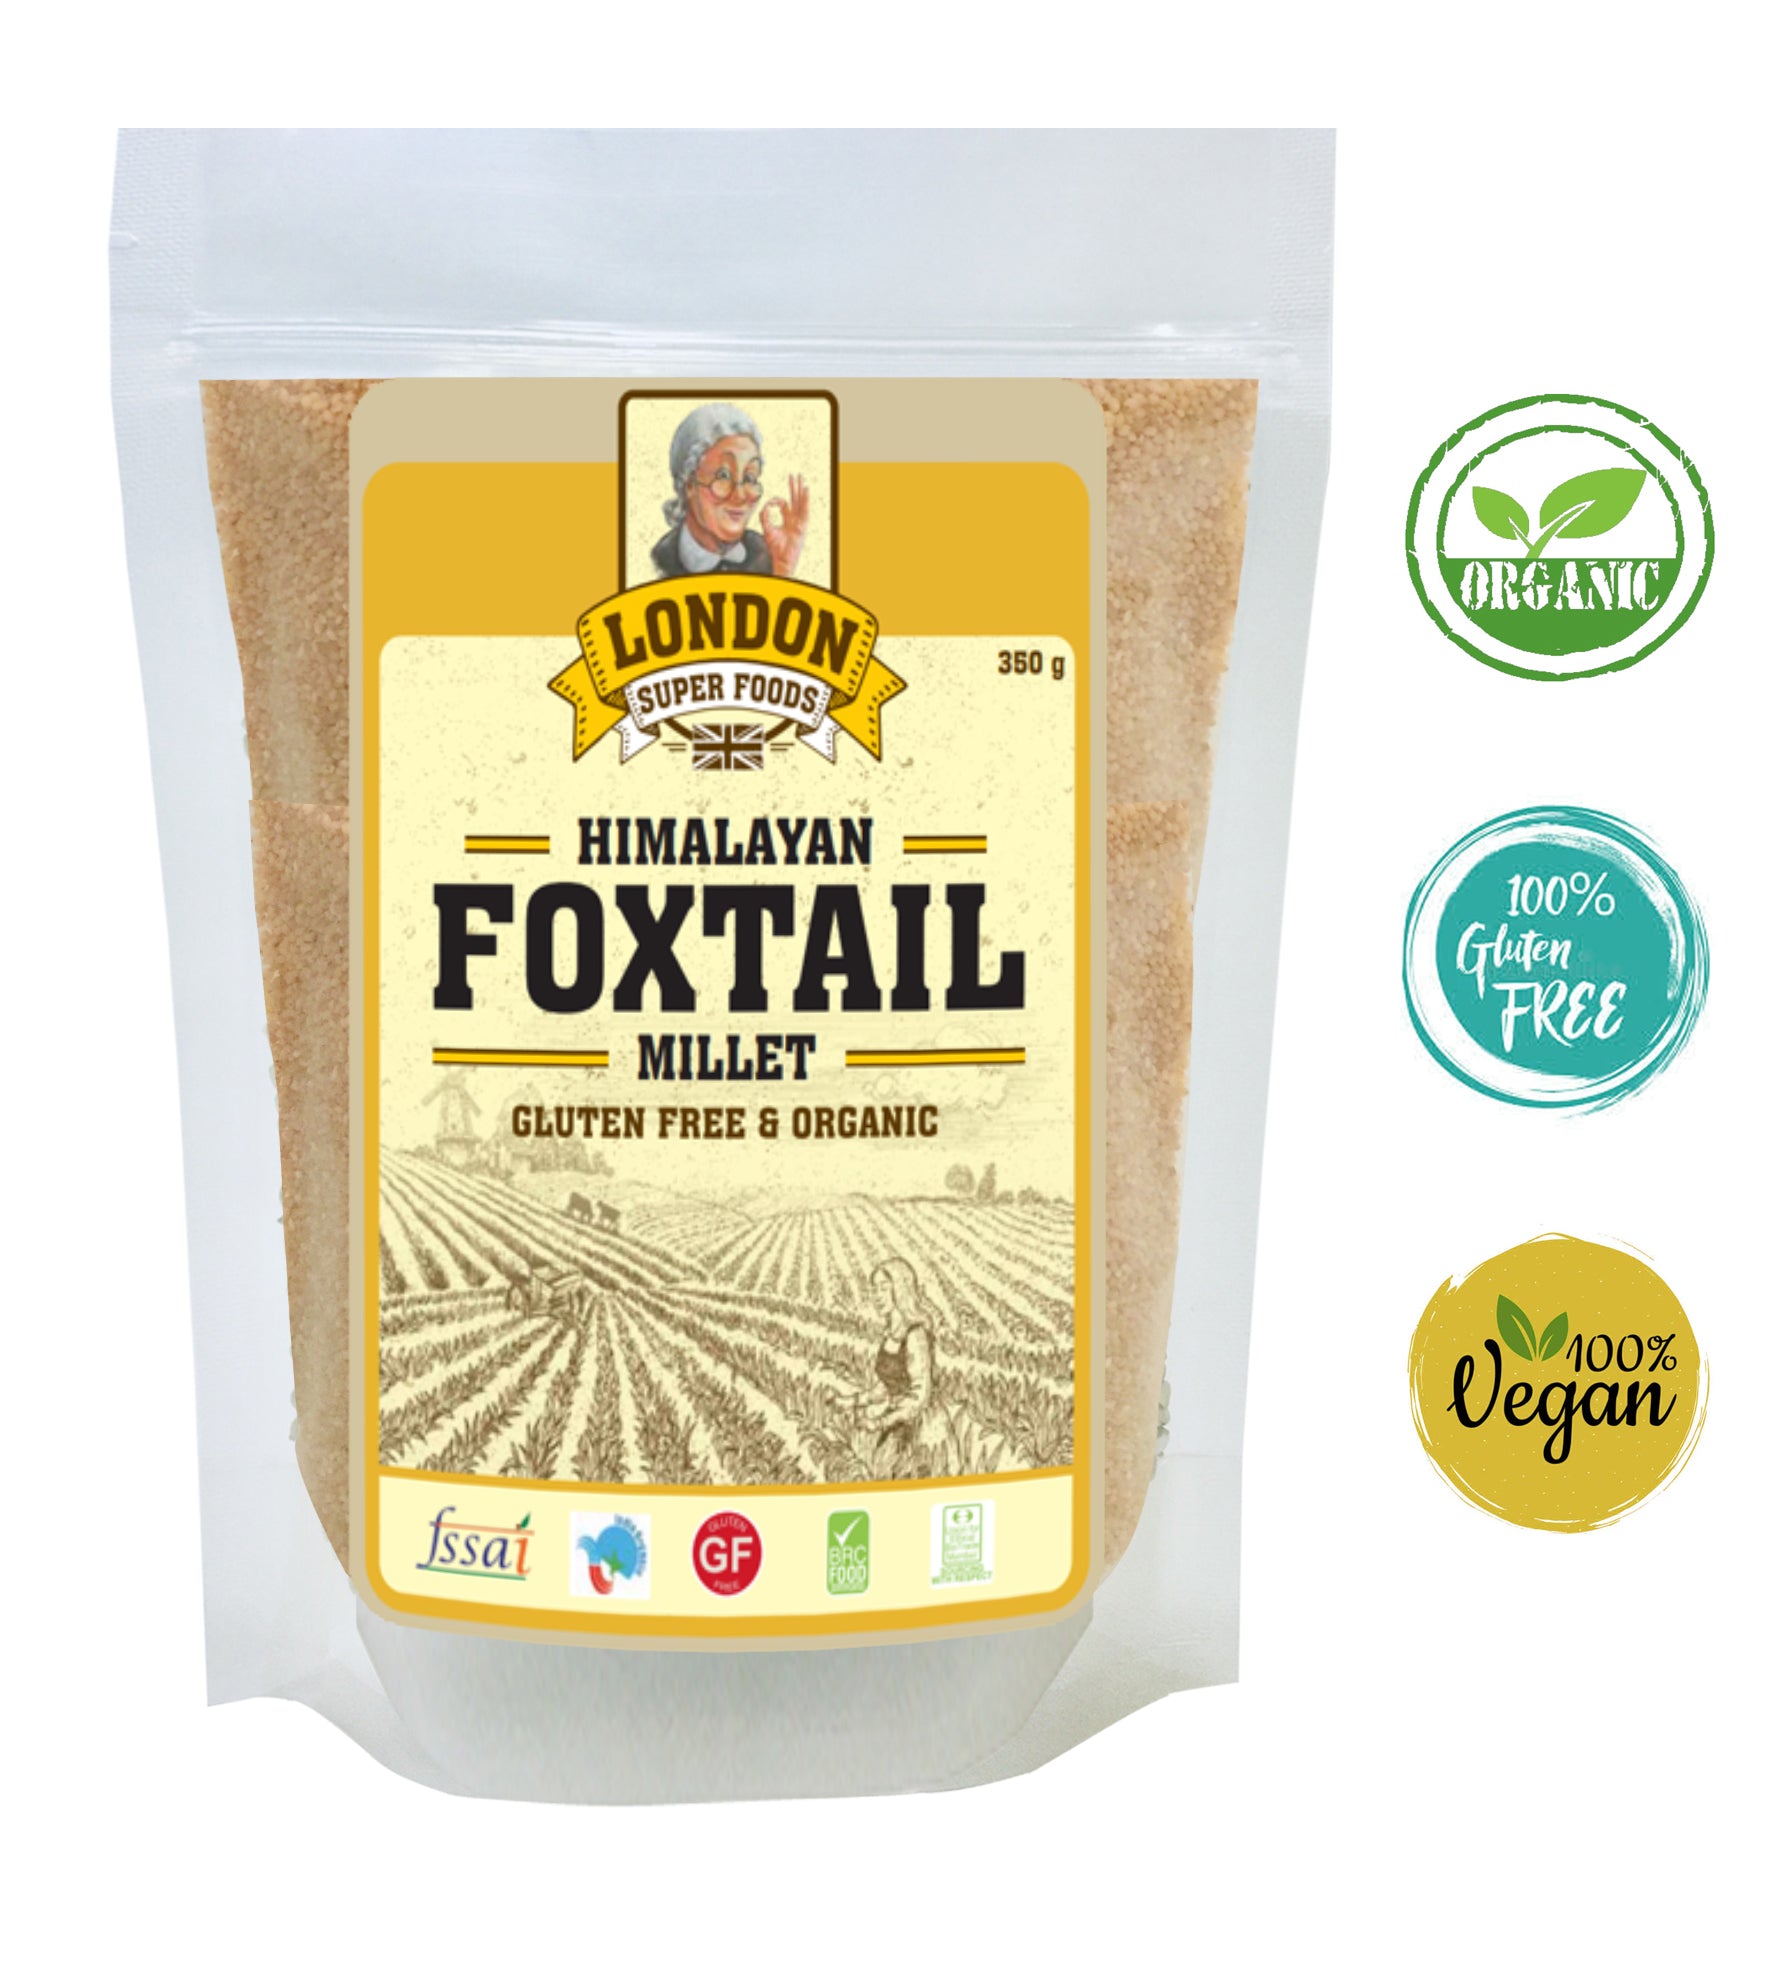 LONDON SUPER FOODS Himalayan Organic Foxtail Millet, 350g - Gluten Free